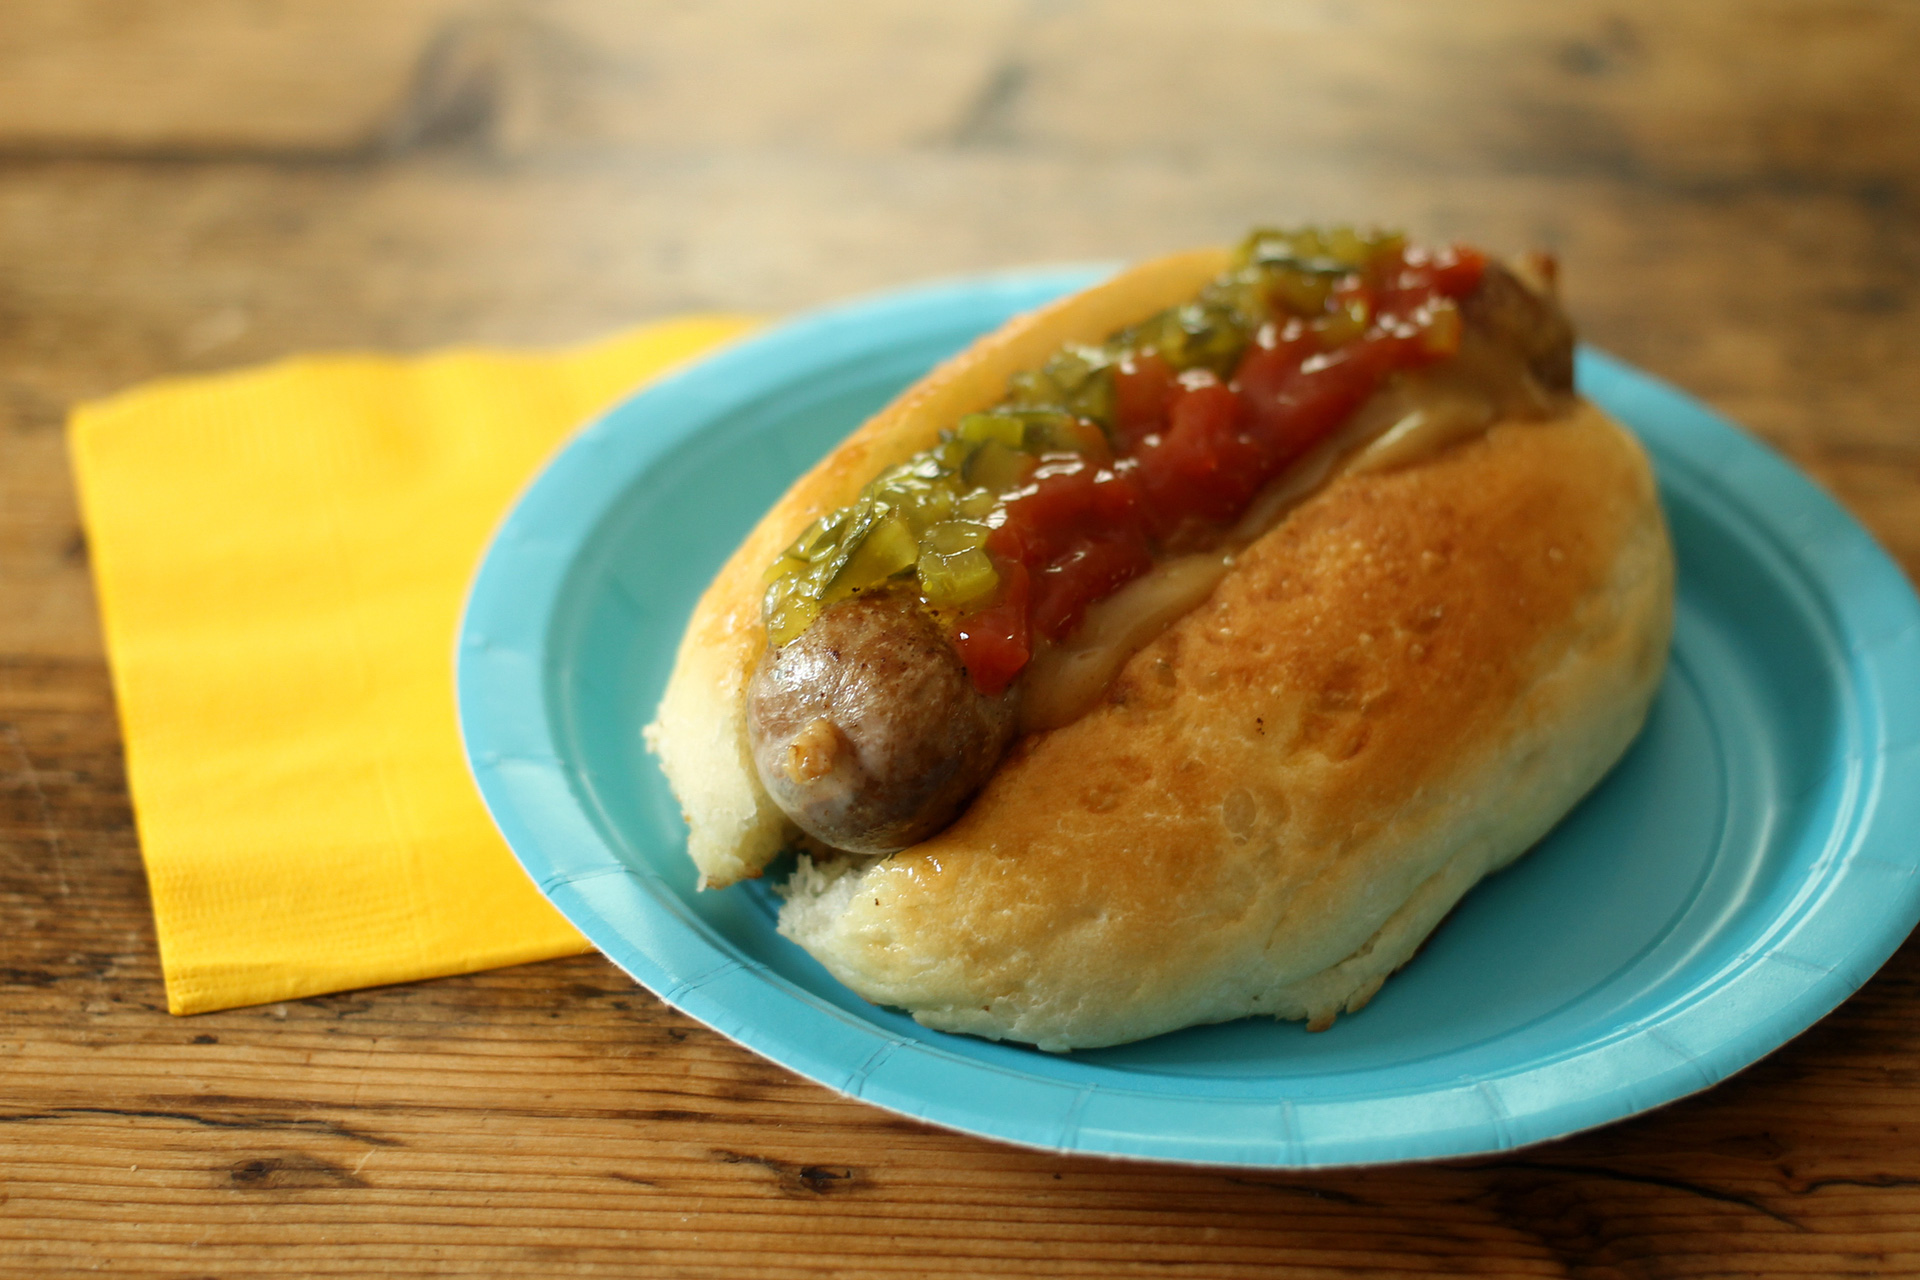 Homemade hot dog in a homemade bun.